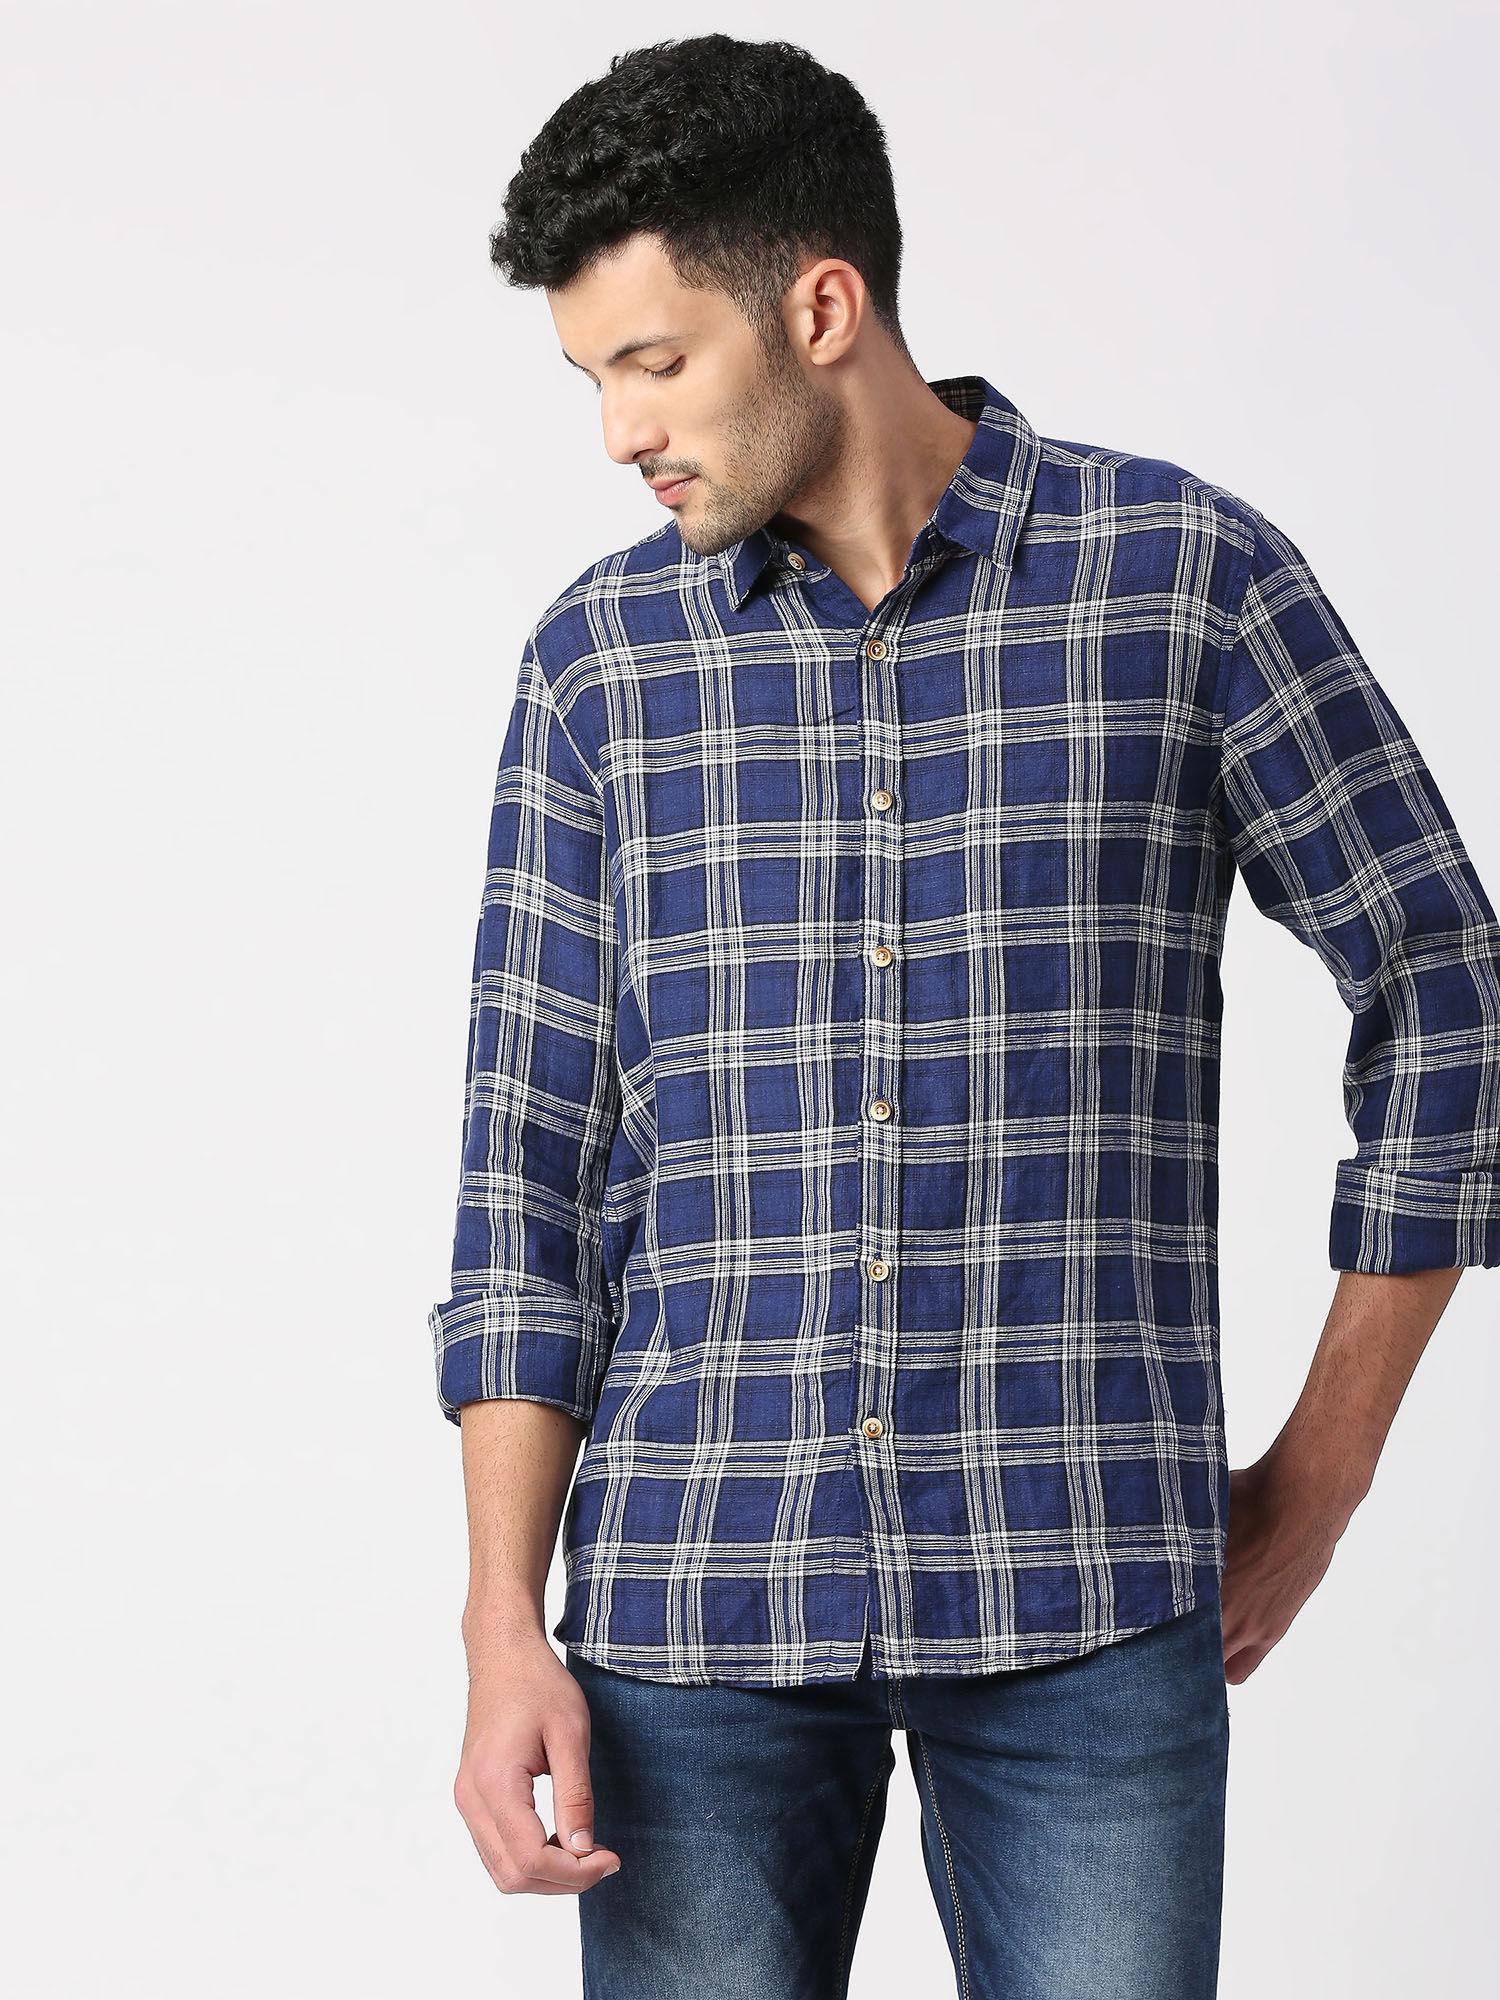 dorian-full-sleeves-pure-linen-check-casual-shirt